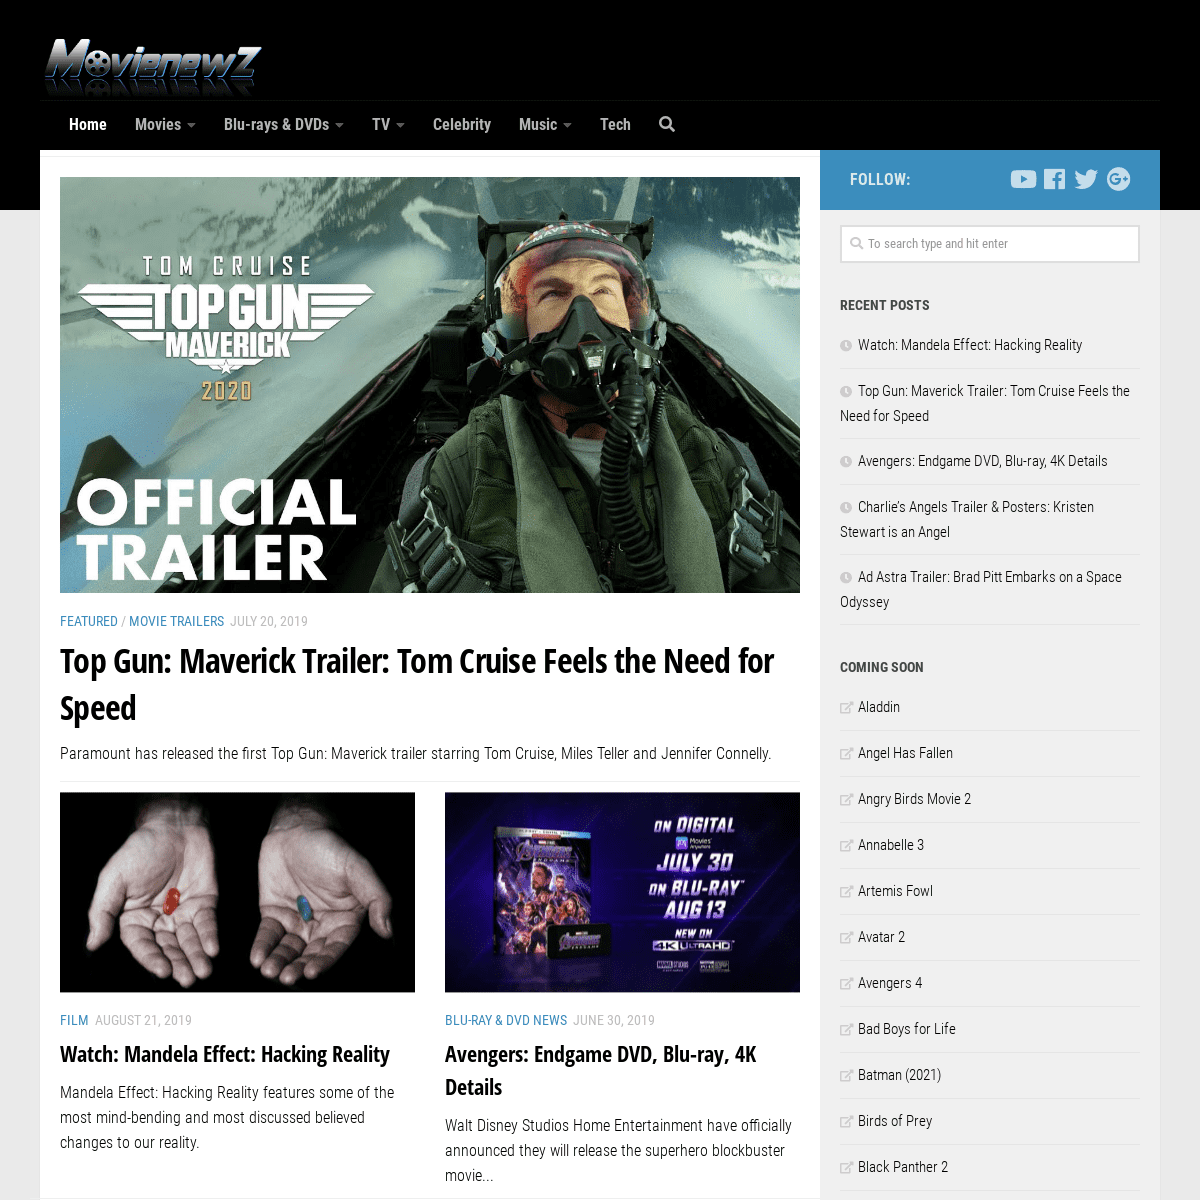 Movienewz.com - Movie News, Release Dates, Plot, Cast, Trailers, Posters, Set Photos, TV News